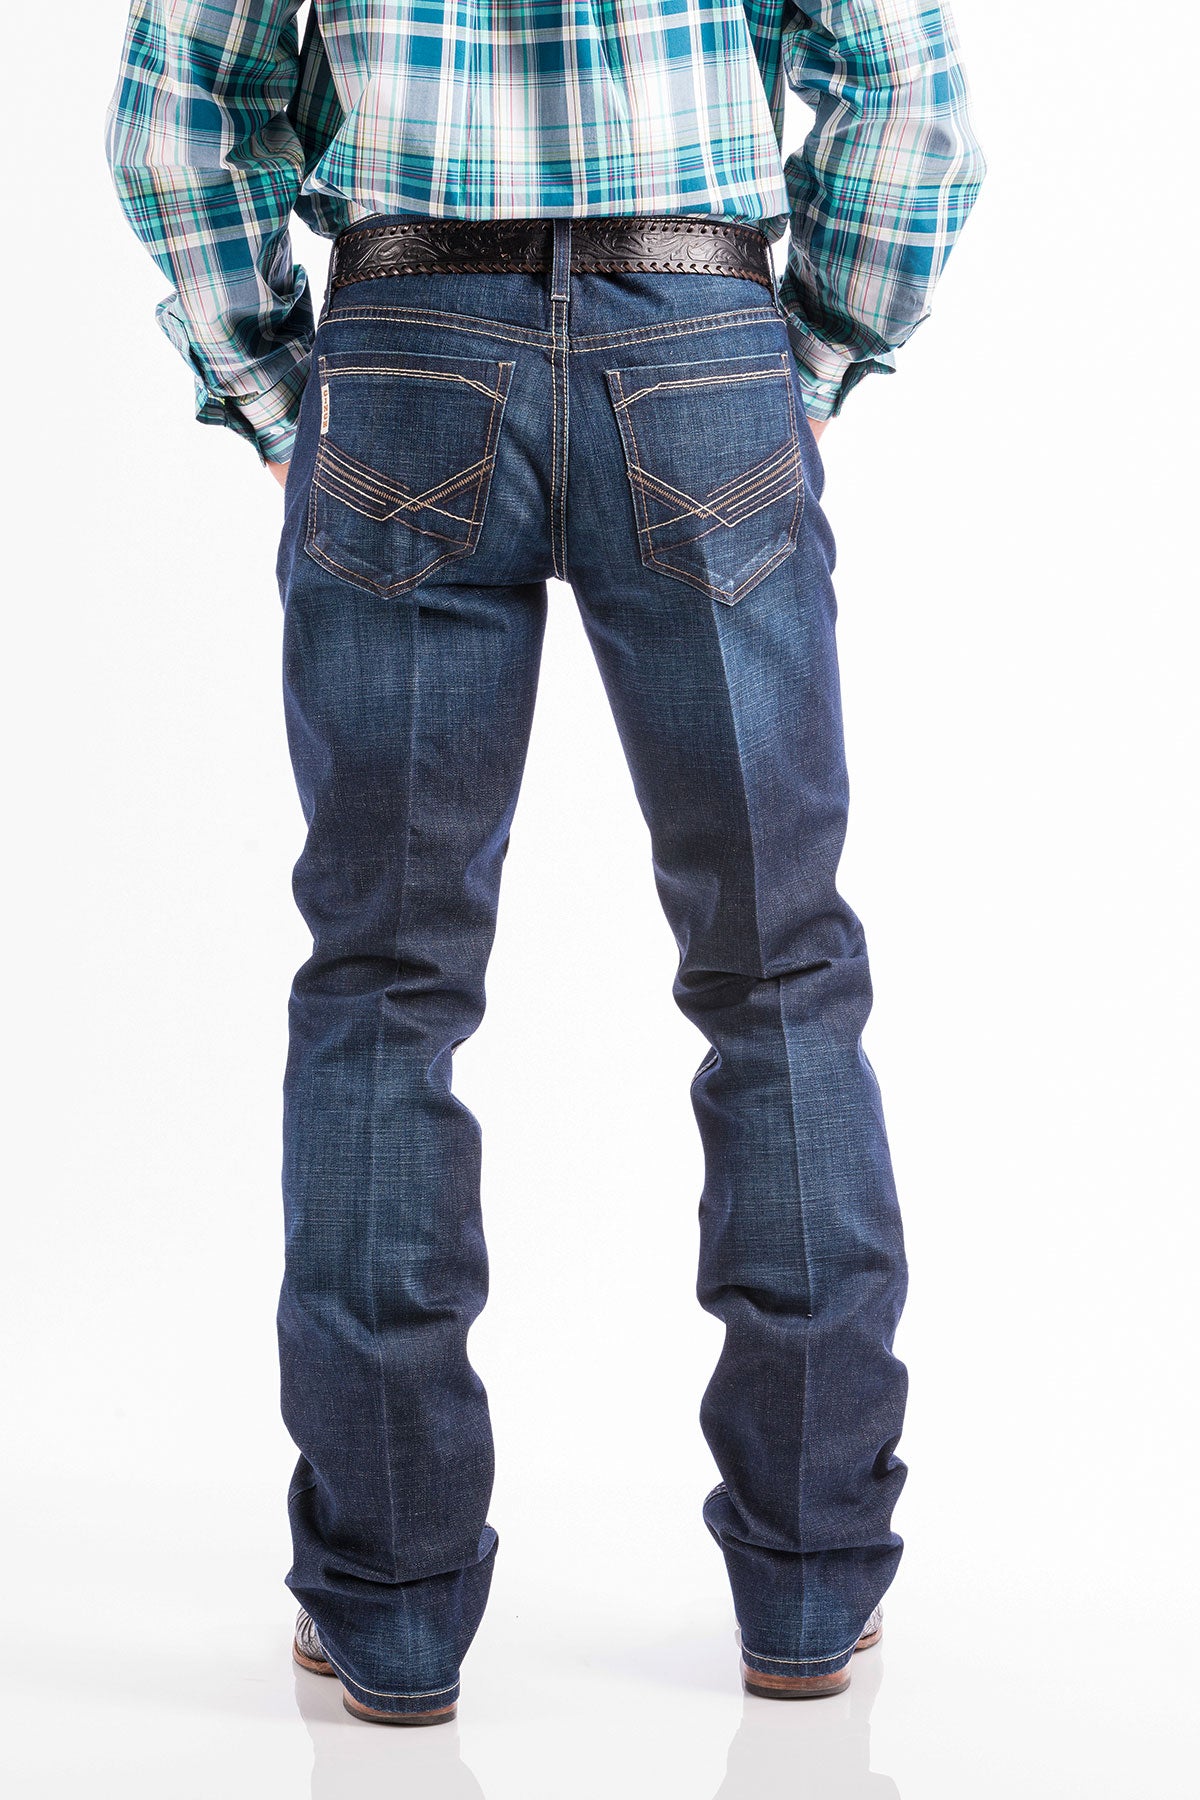 h&m jeans shirt